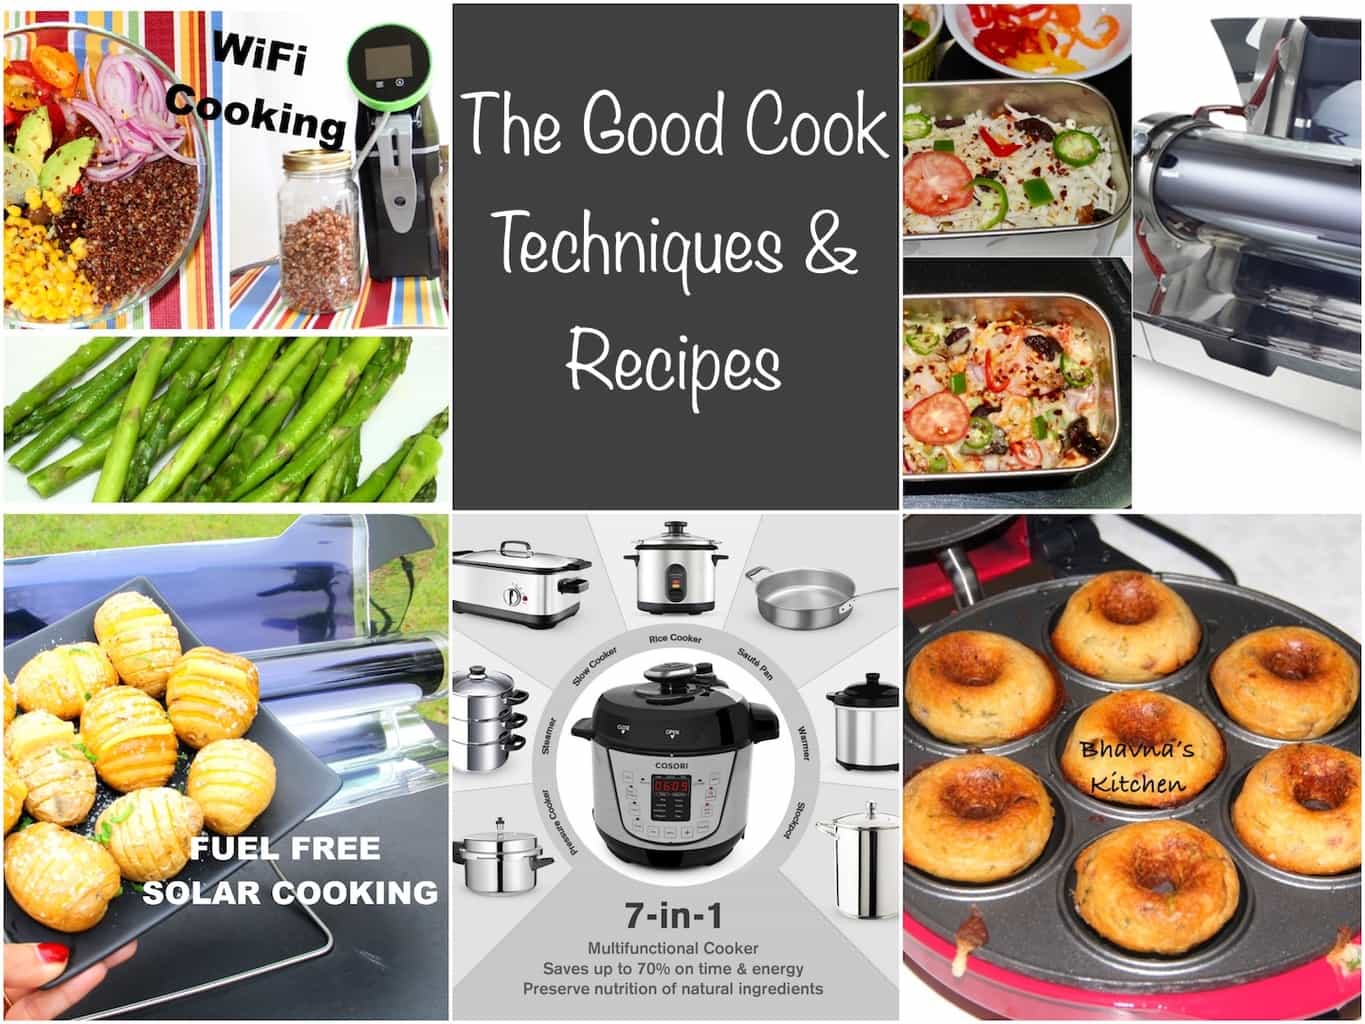 The Good Cook Techniques & Recipes